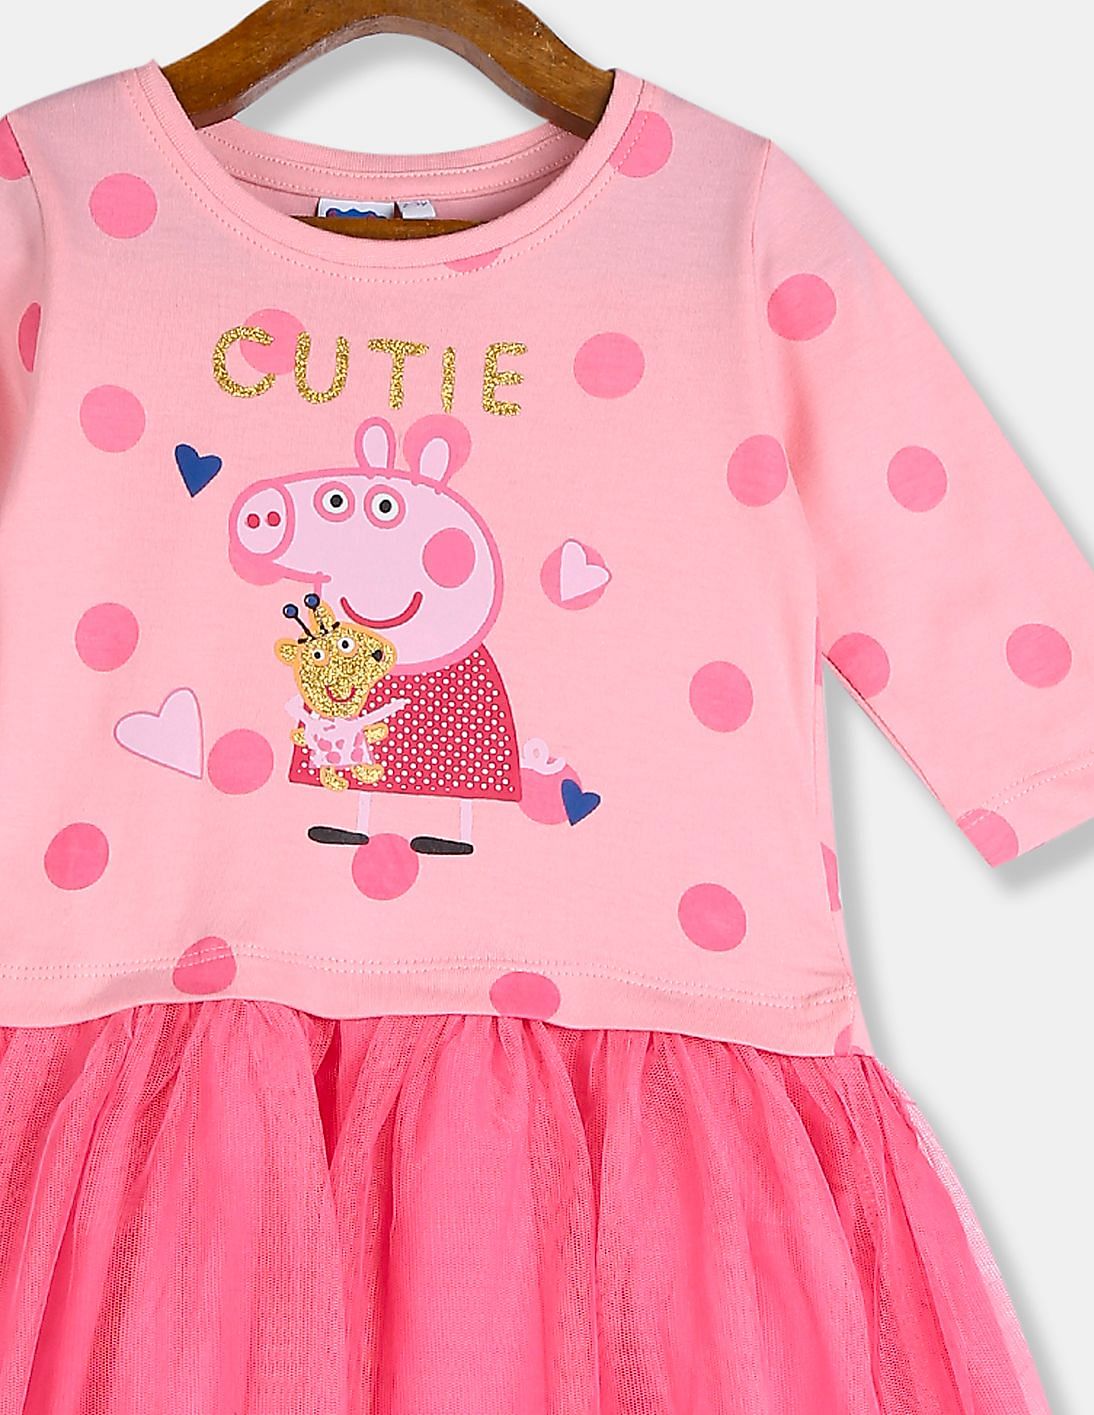 Black Peppa Pig 2nd Birthday tshirt dress for baby girl and Baby Boy